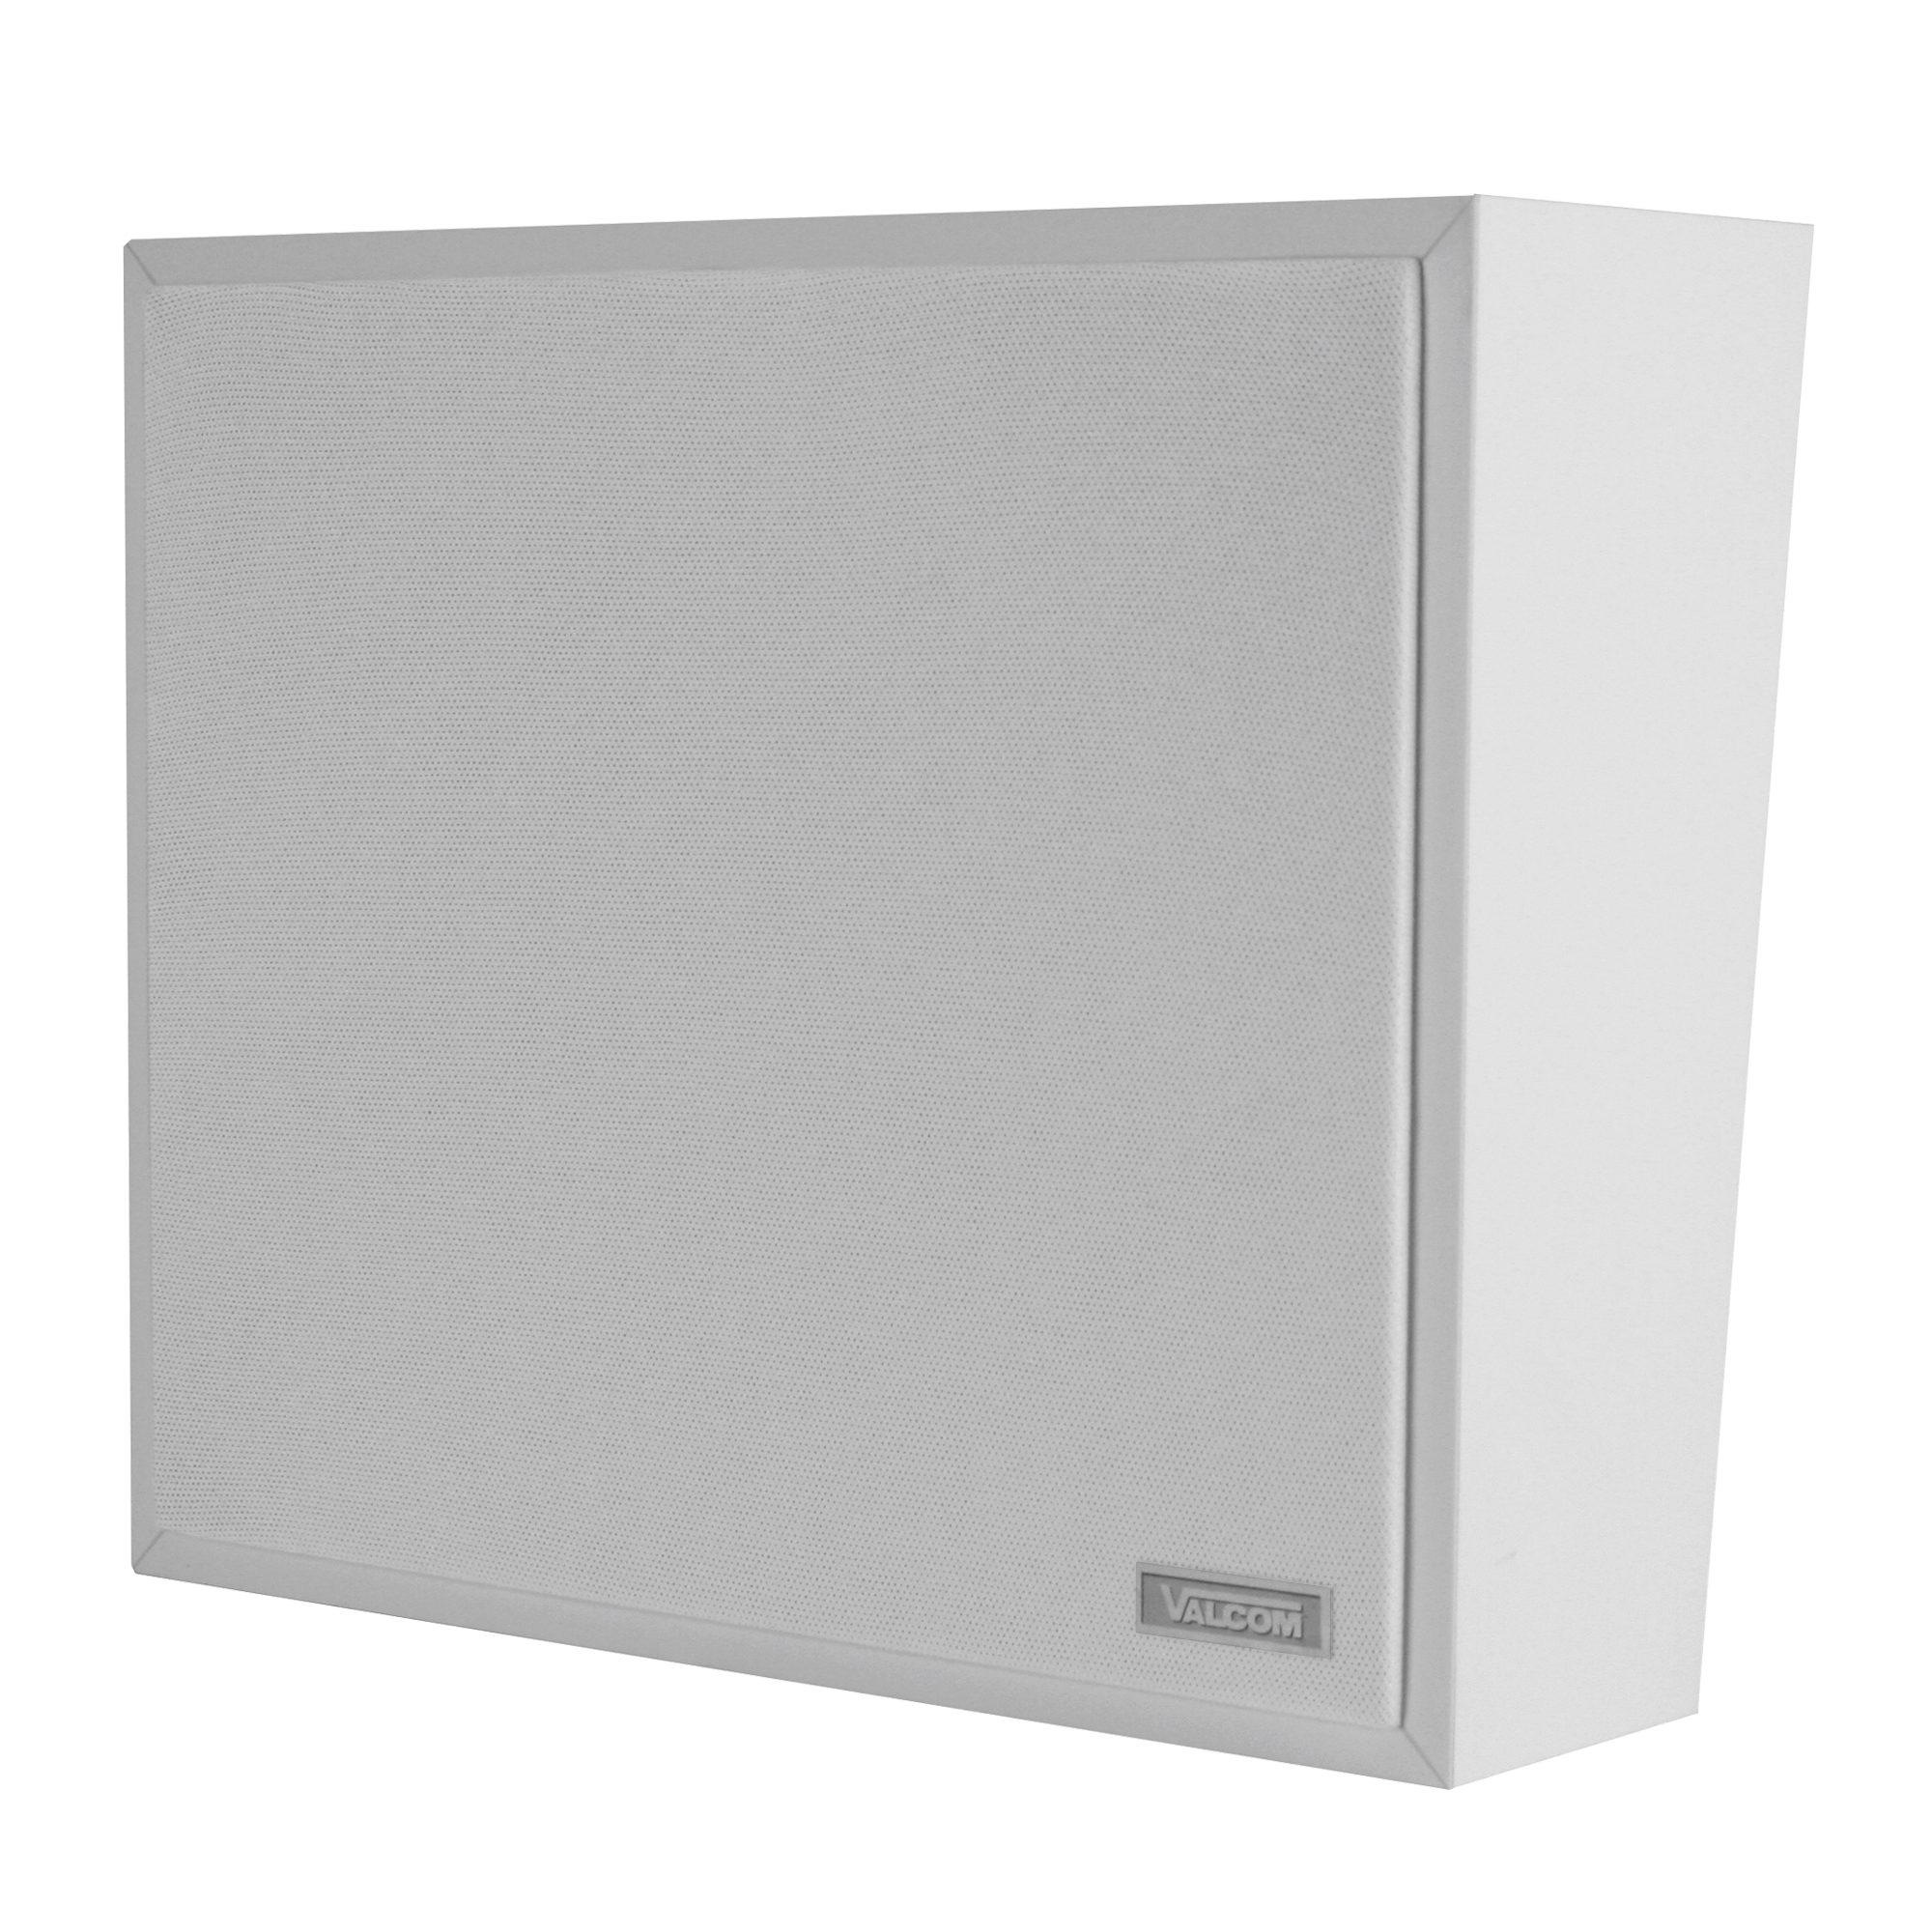 V-1060-W Wall Speaker, One-Way, White